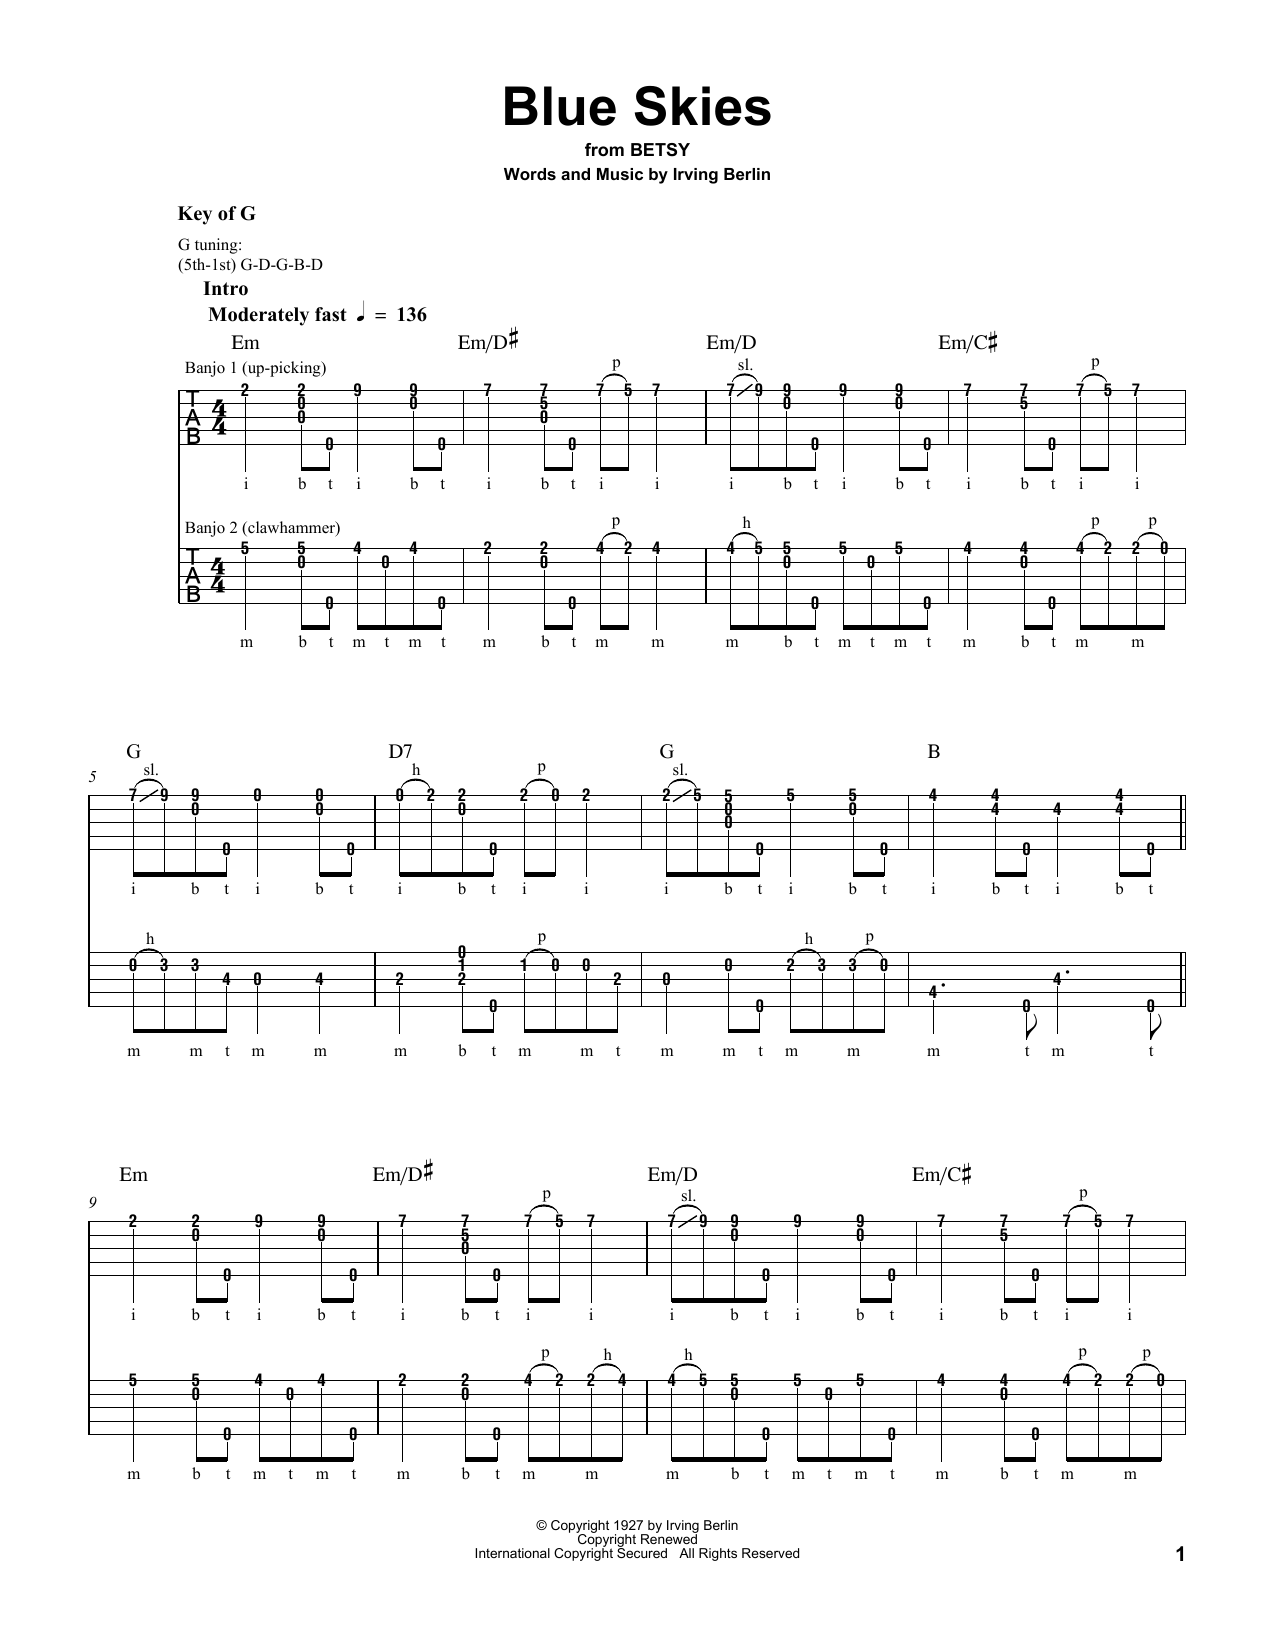 Pete Seeger Blue Skies Sheet Music Notes & Chords for Banjo - Download or Print PDF